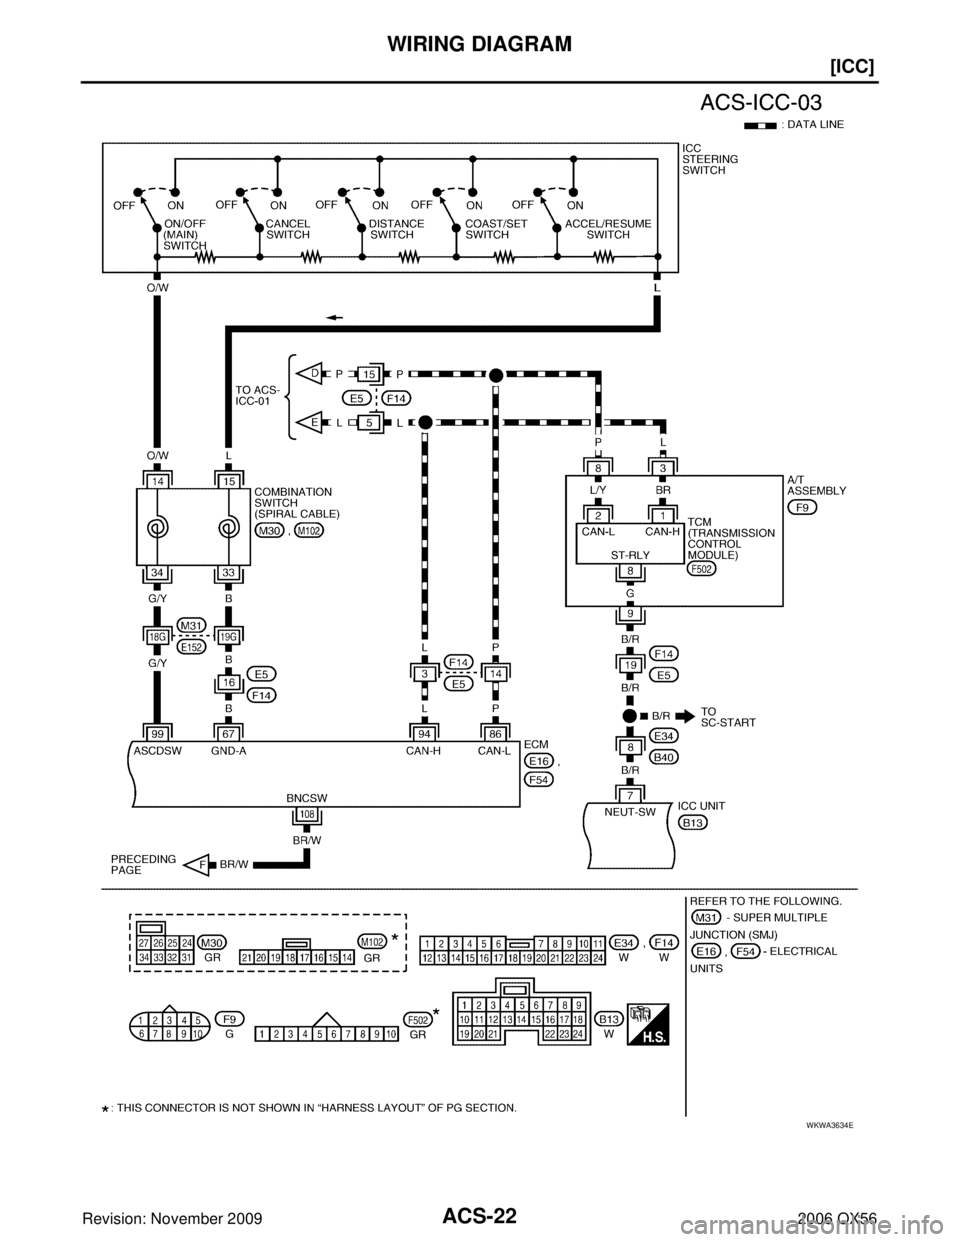 INFINITI QX56 2006  Factory Service Manual ACS-22
[ICC]
WIRING DIAGRAM
Revision: November 20092006 QX56
WKWA3634E 